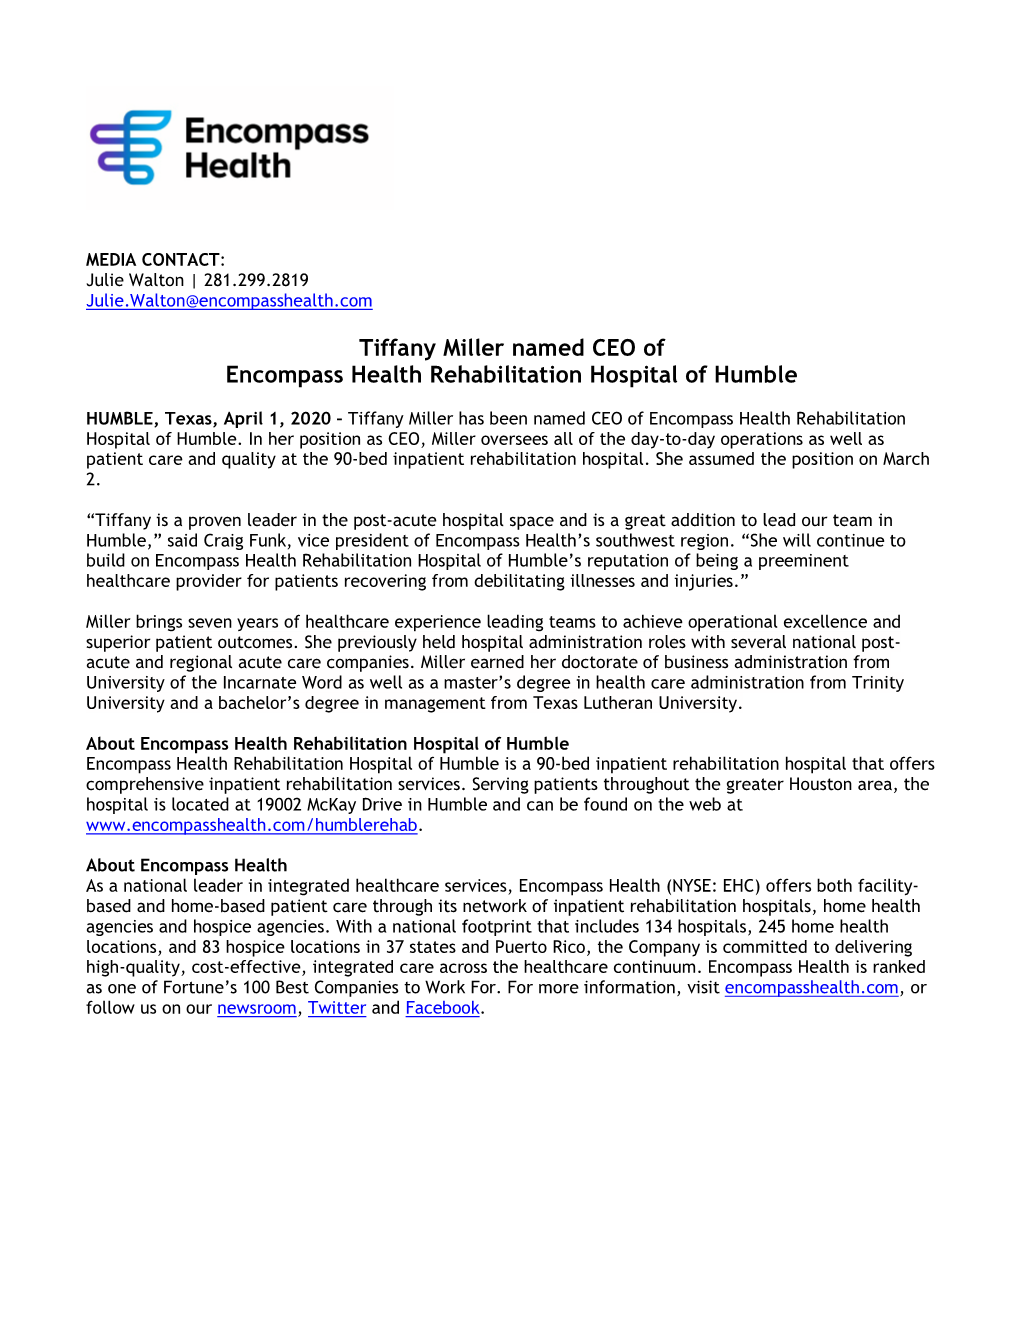 Tiffany Miller Named CEO of Encompass Health Rehabilitation Hospital of Humble